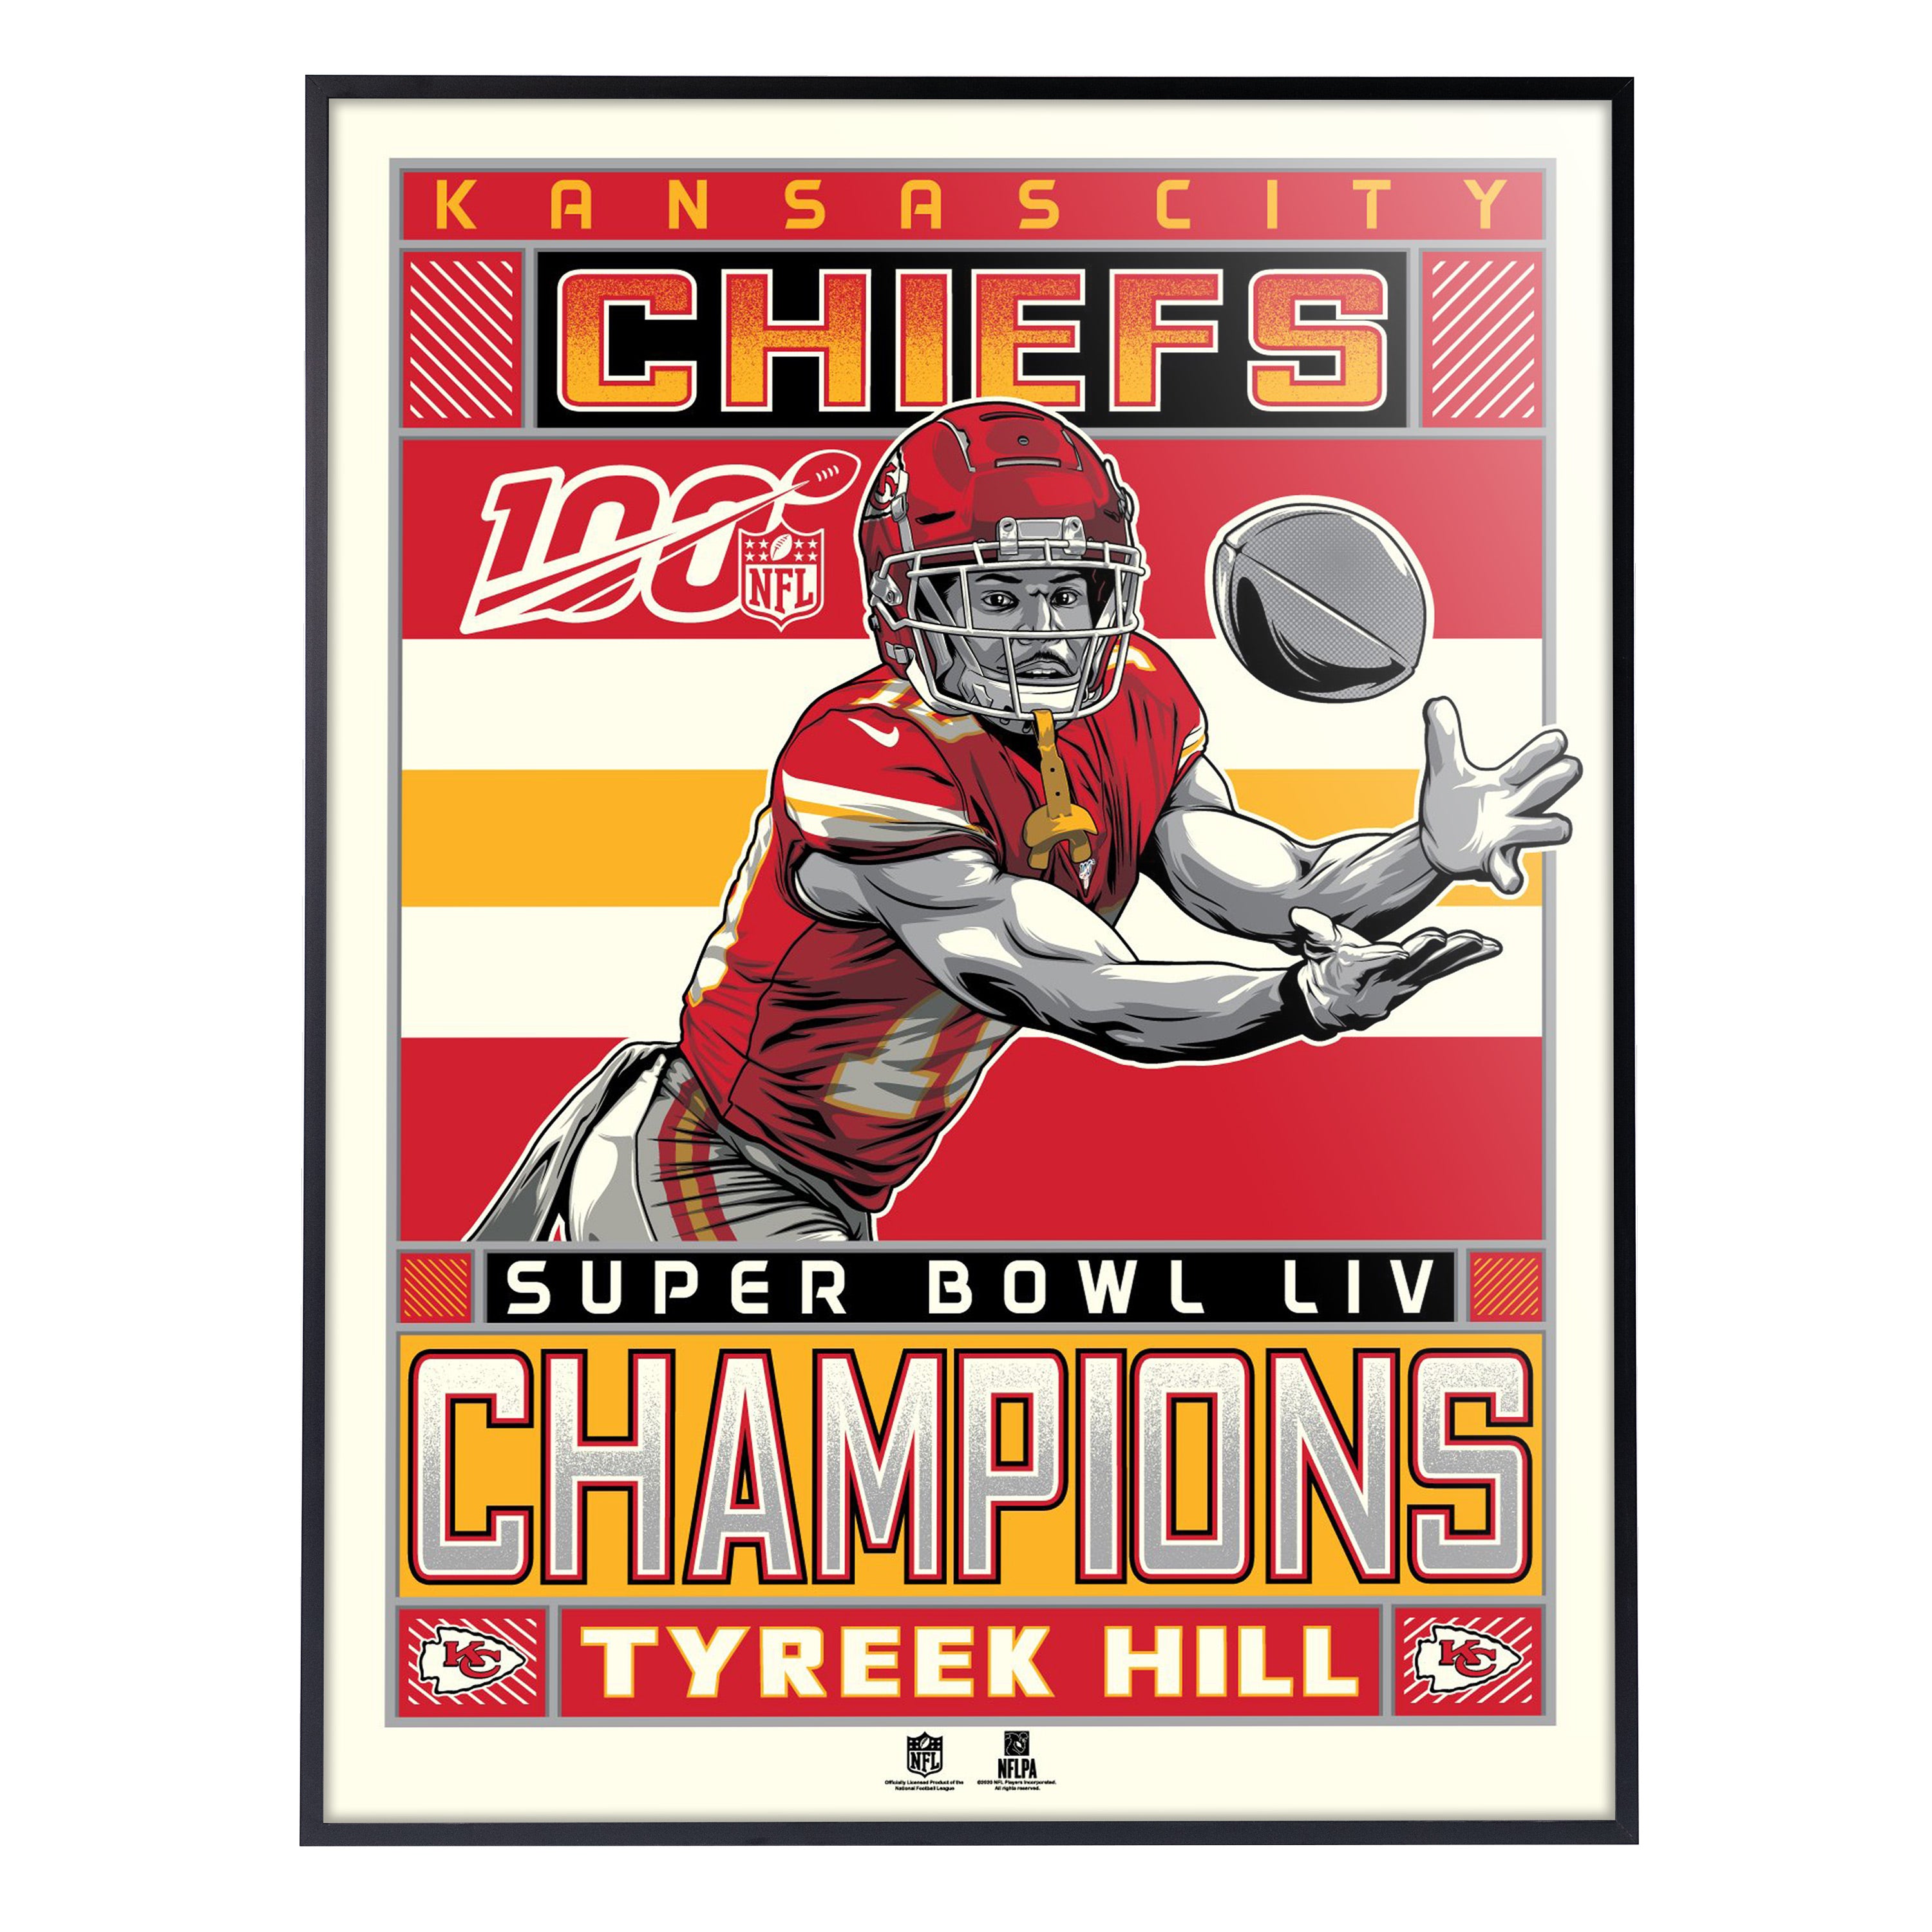 NFL - The Kansas City Chiefs ARE SUPER BOWL CHAMPIONS! #SBLIV